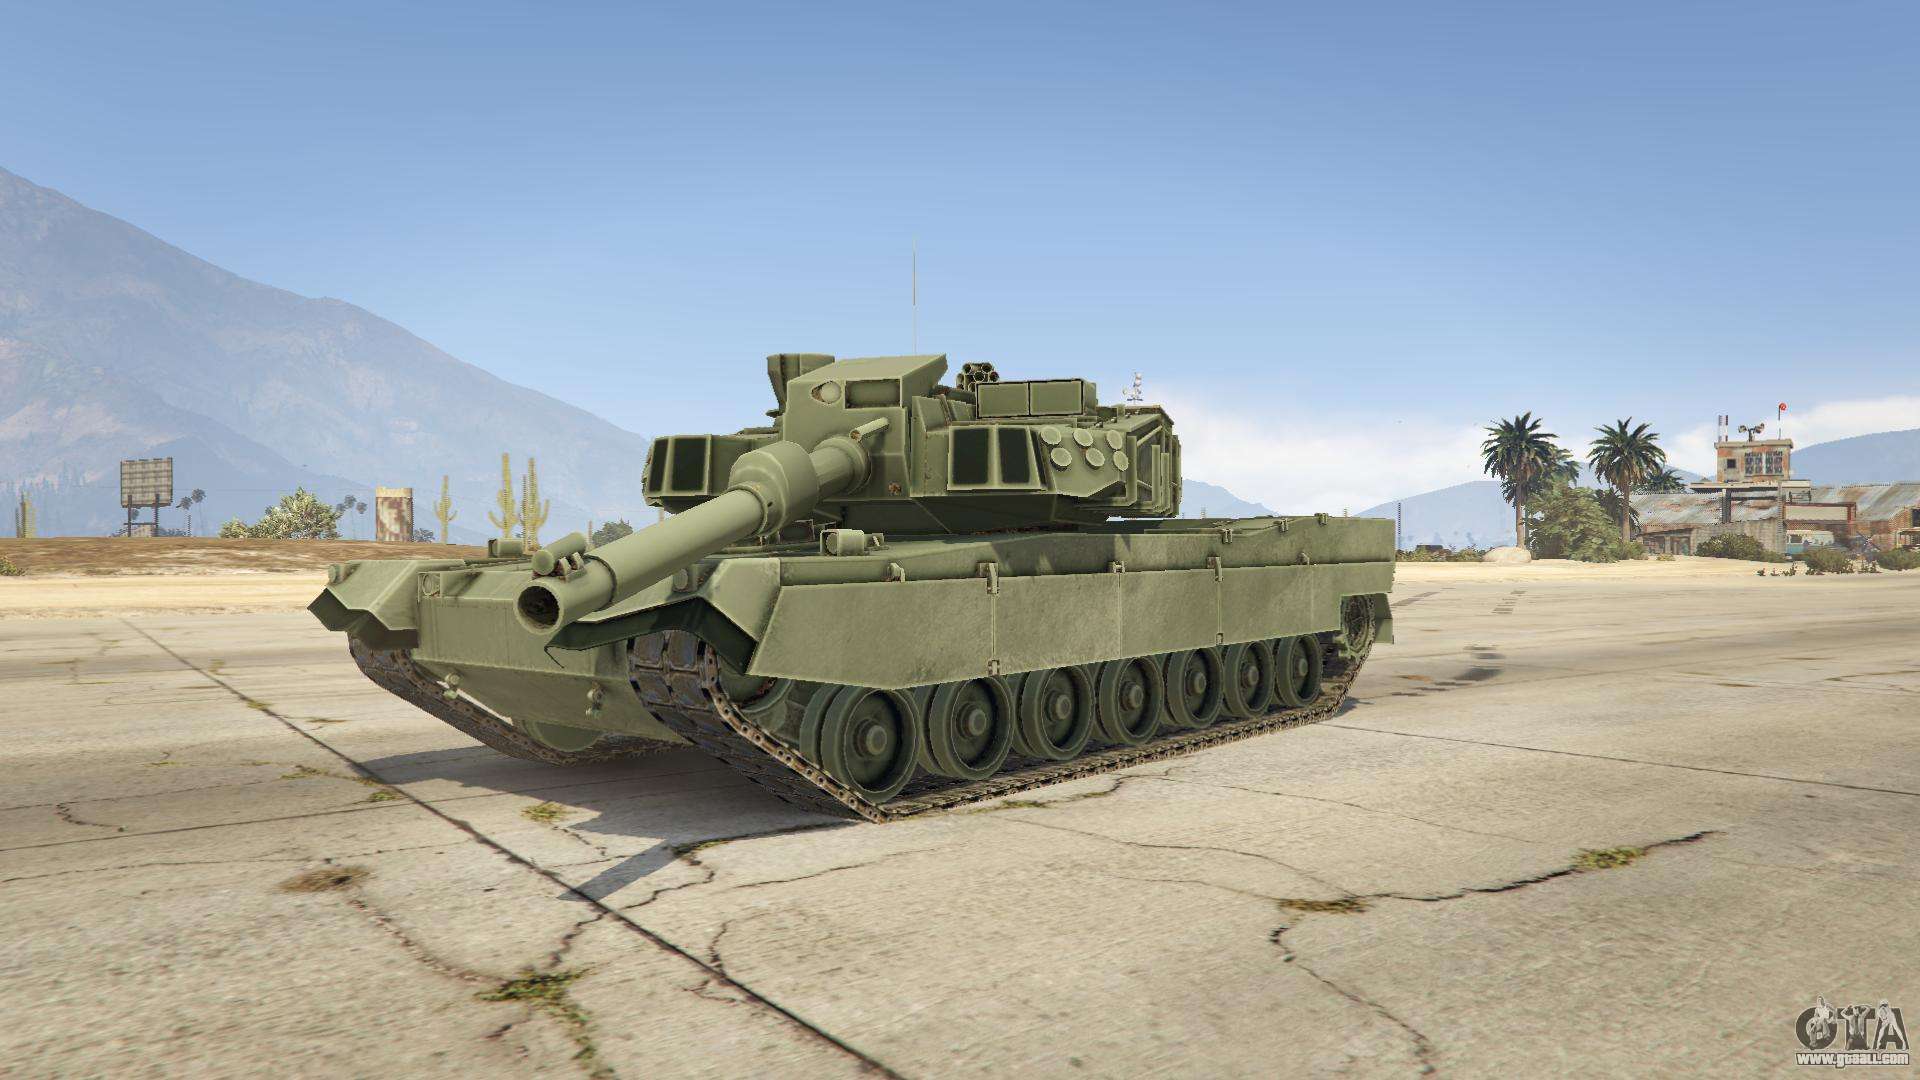 K-2 Tank : SNAFU!: Desert-optimised K2 'Black Panther' Main Battle Tank - It has an l55 main gun, 1500hp engine & modular armor.